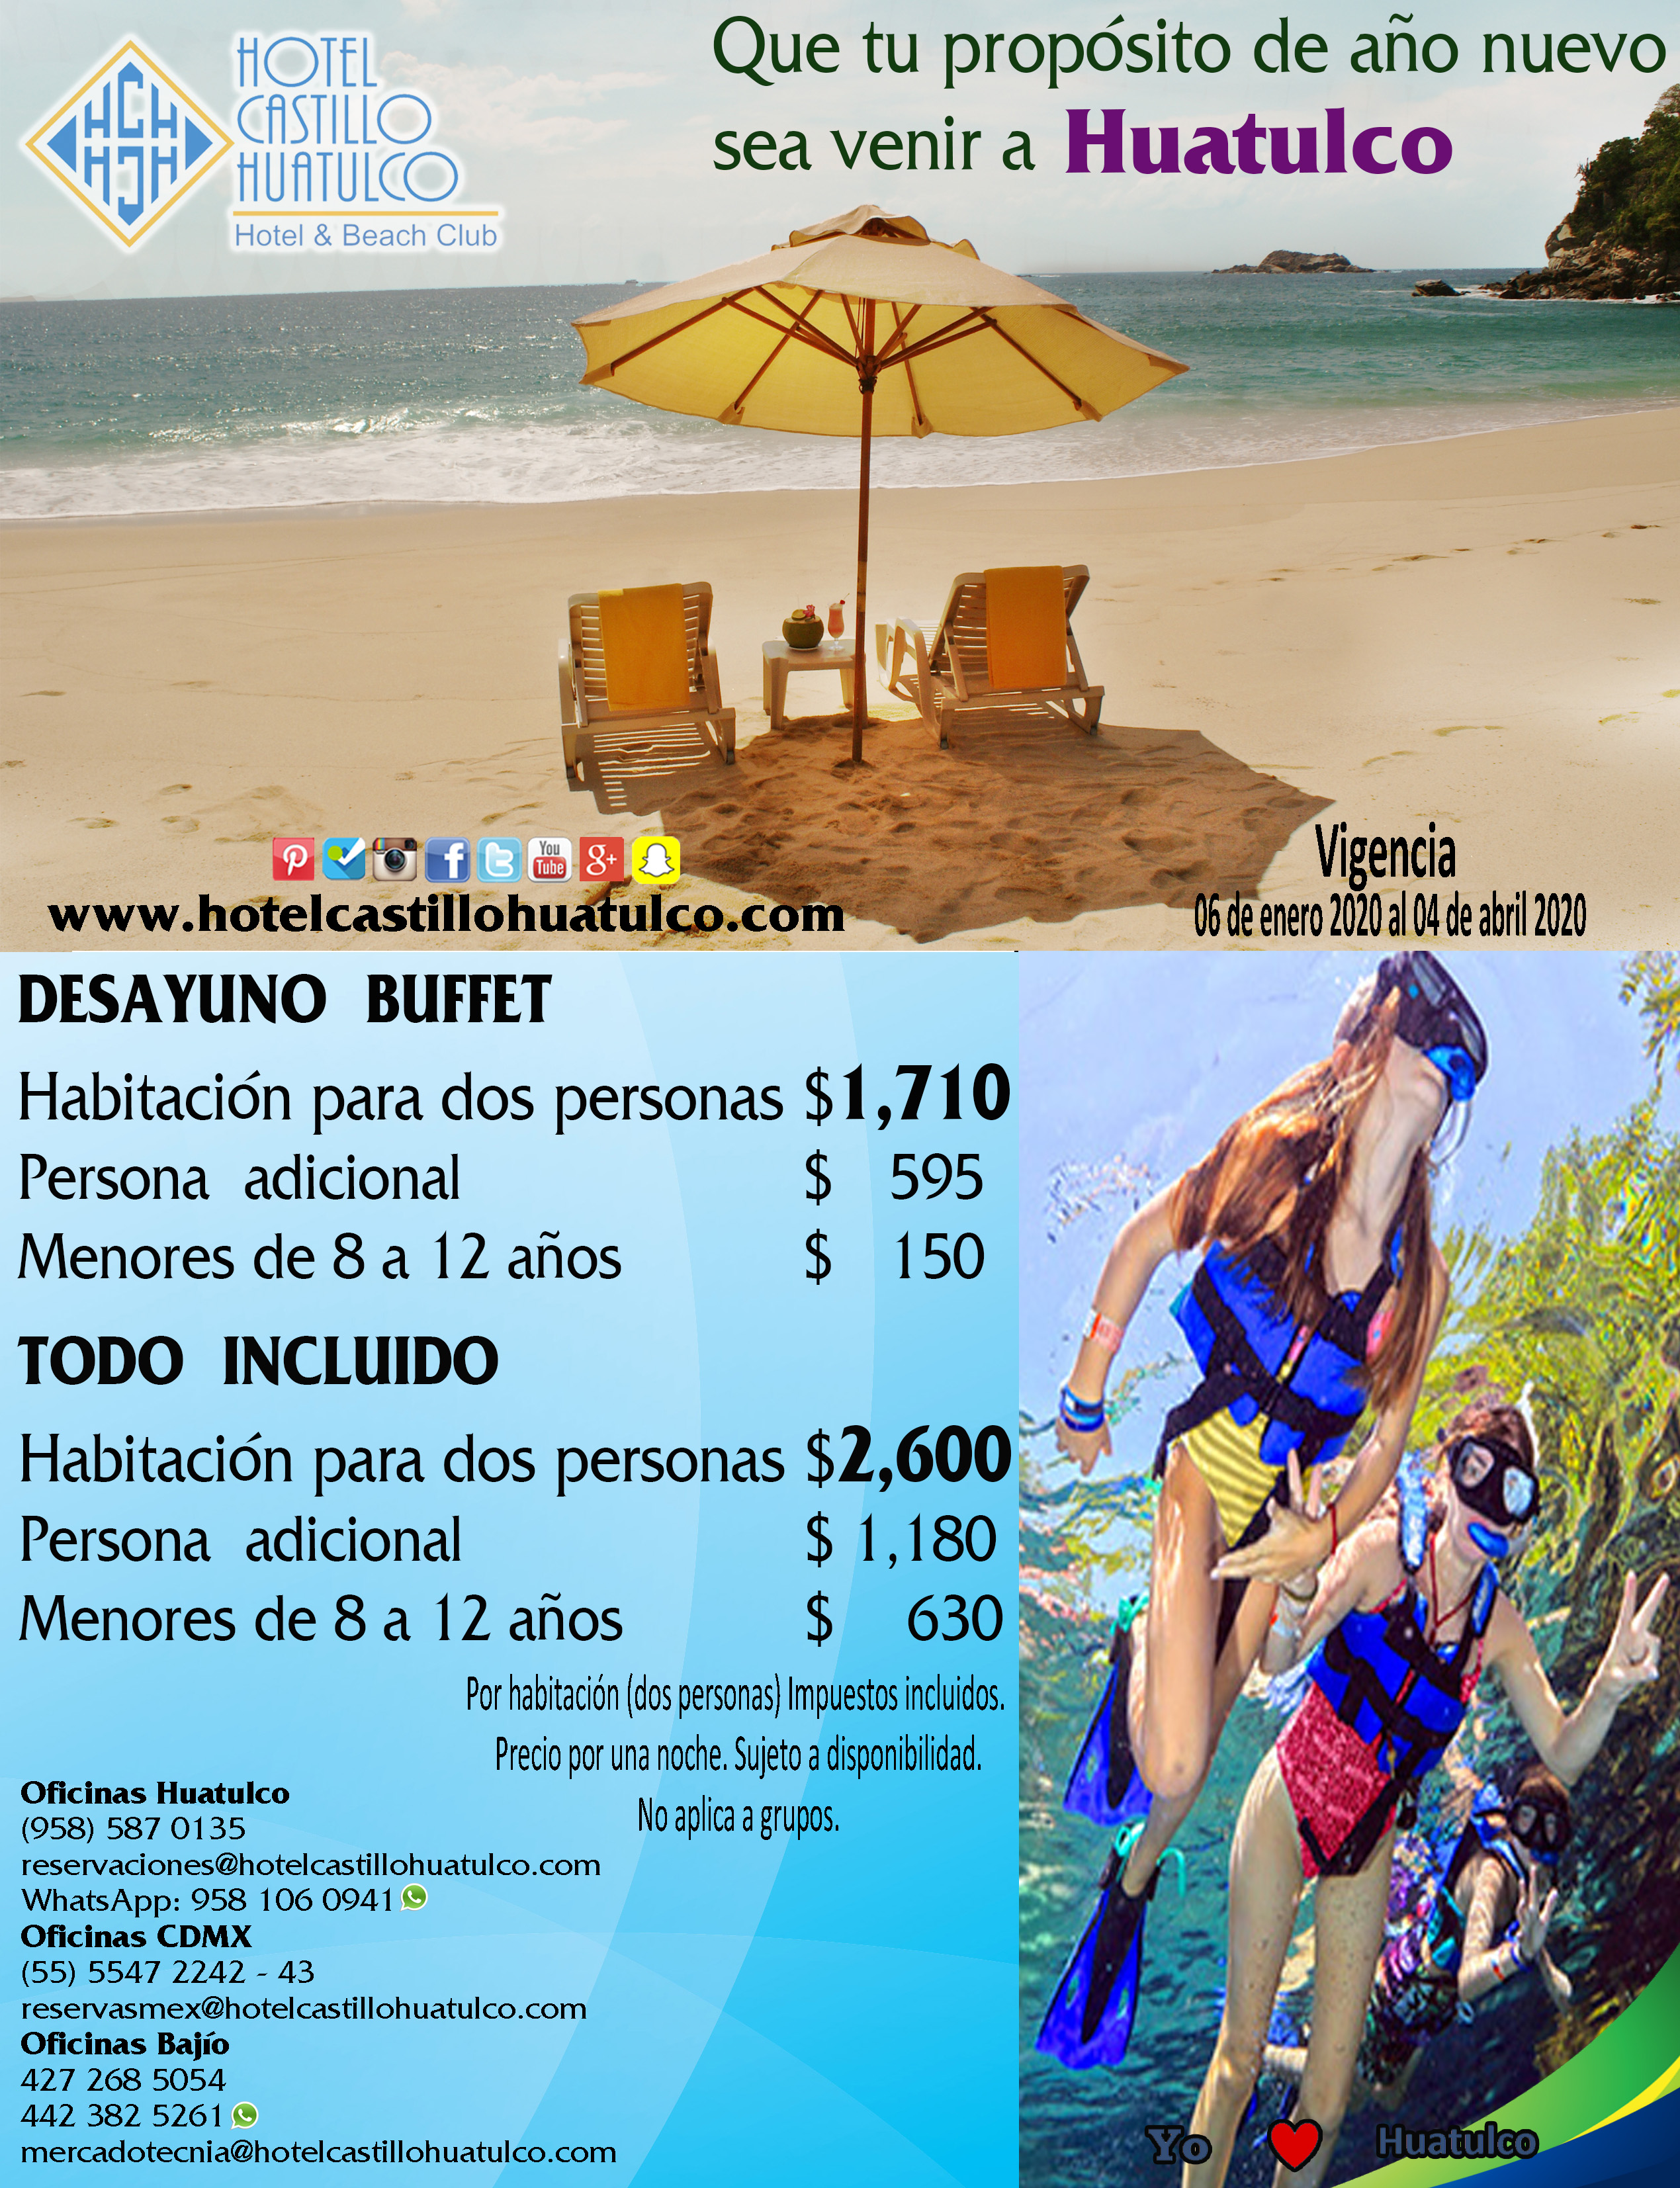 Hotel Castillo Huatulco & Beach Club on Twitter: 